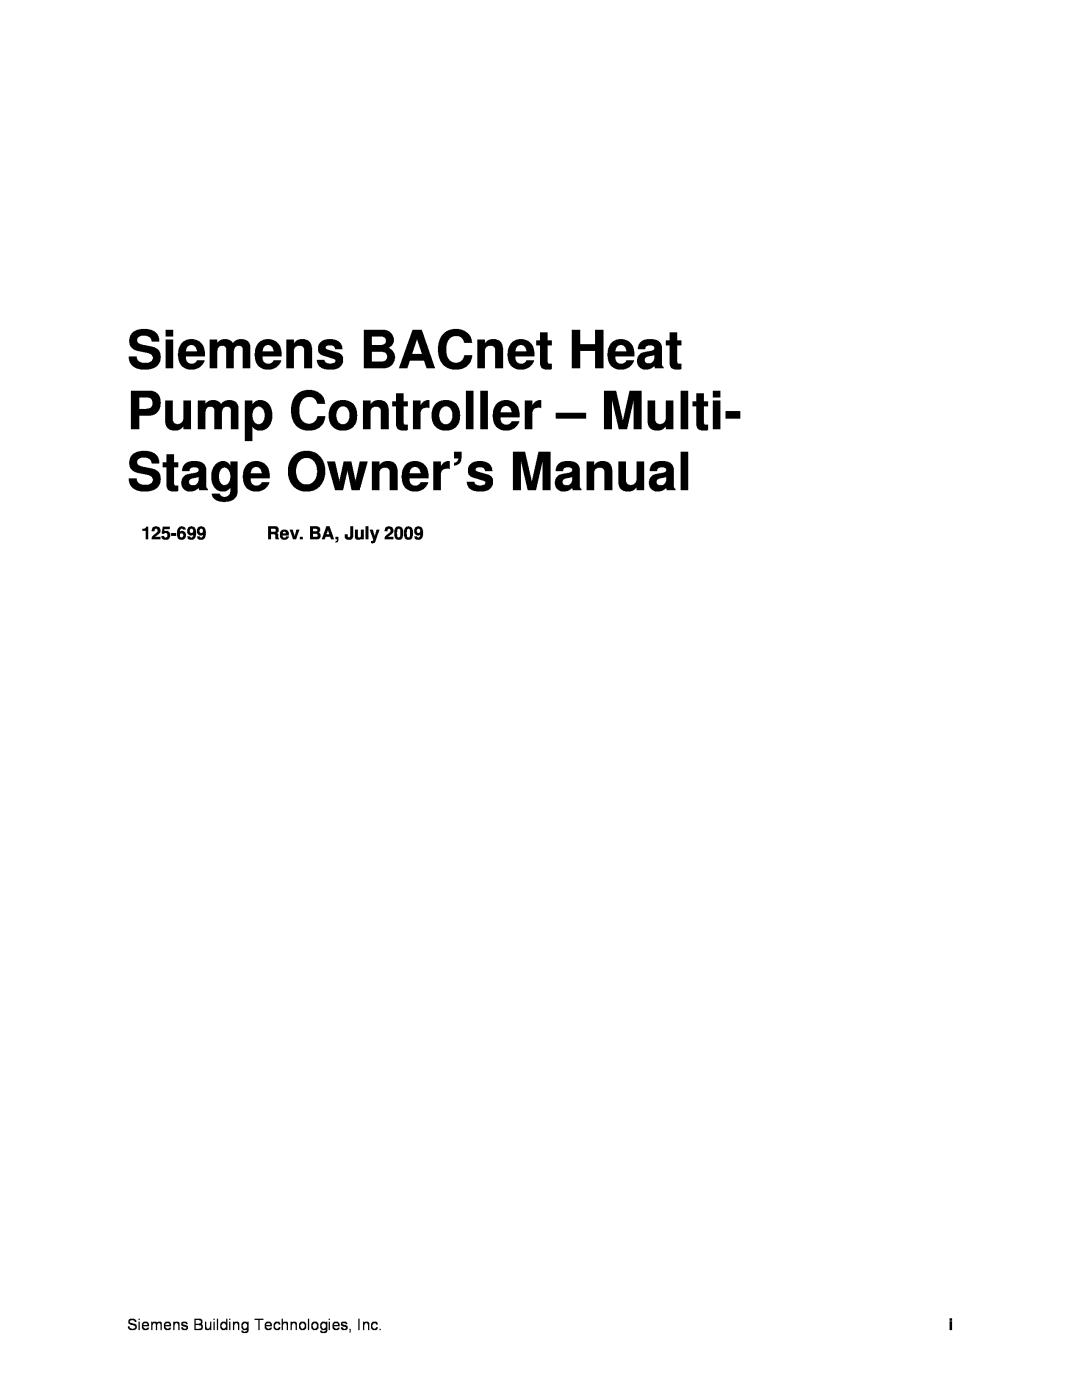 Siemens owner manual Siemens BACnet Heat Pump Controller - Multi, 125-699Rev. BA, July 